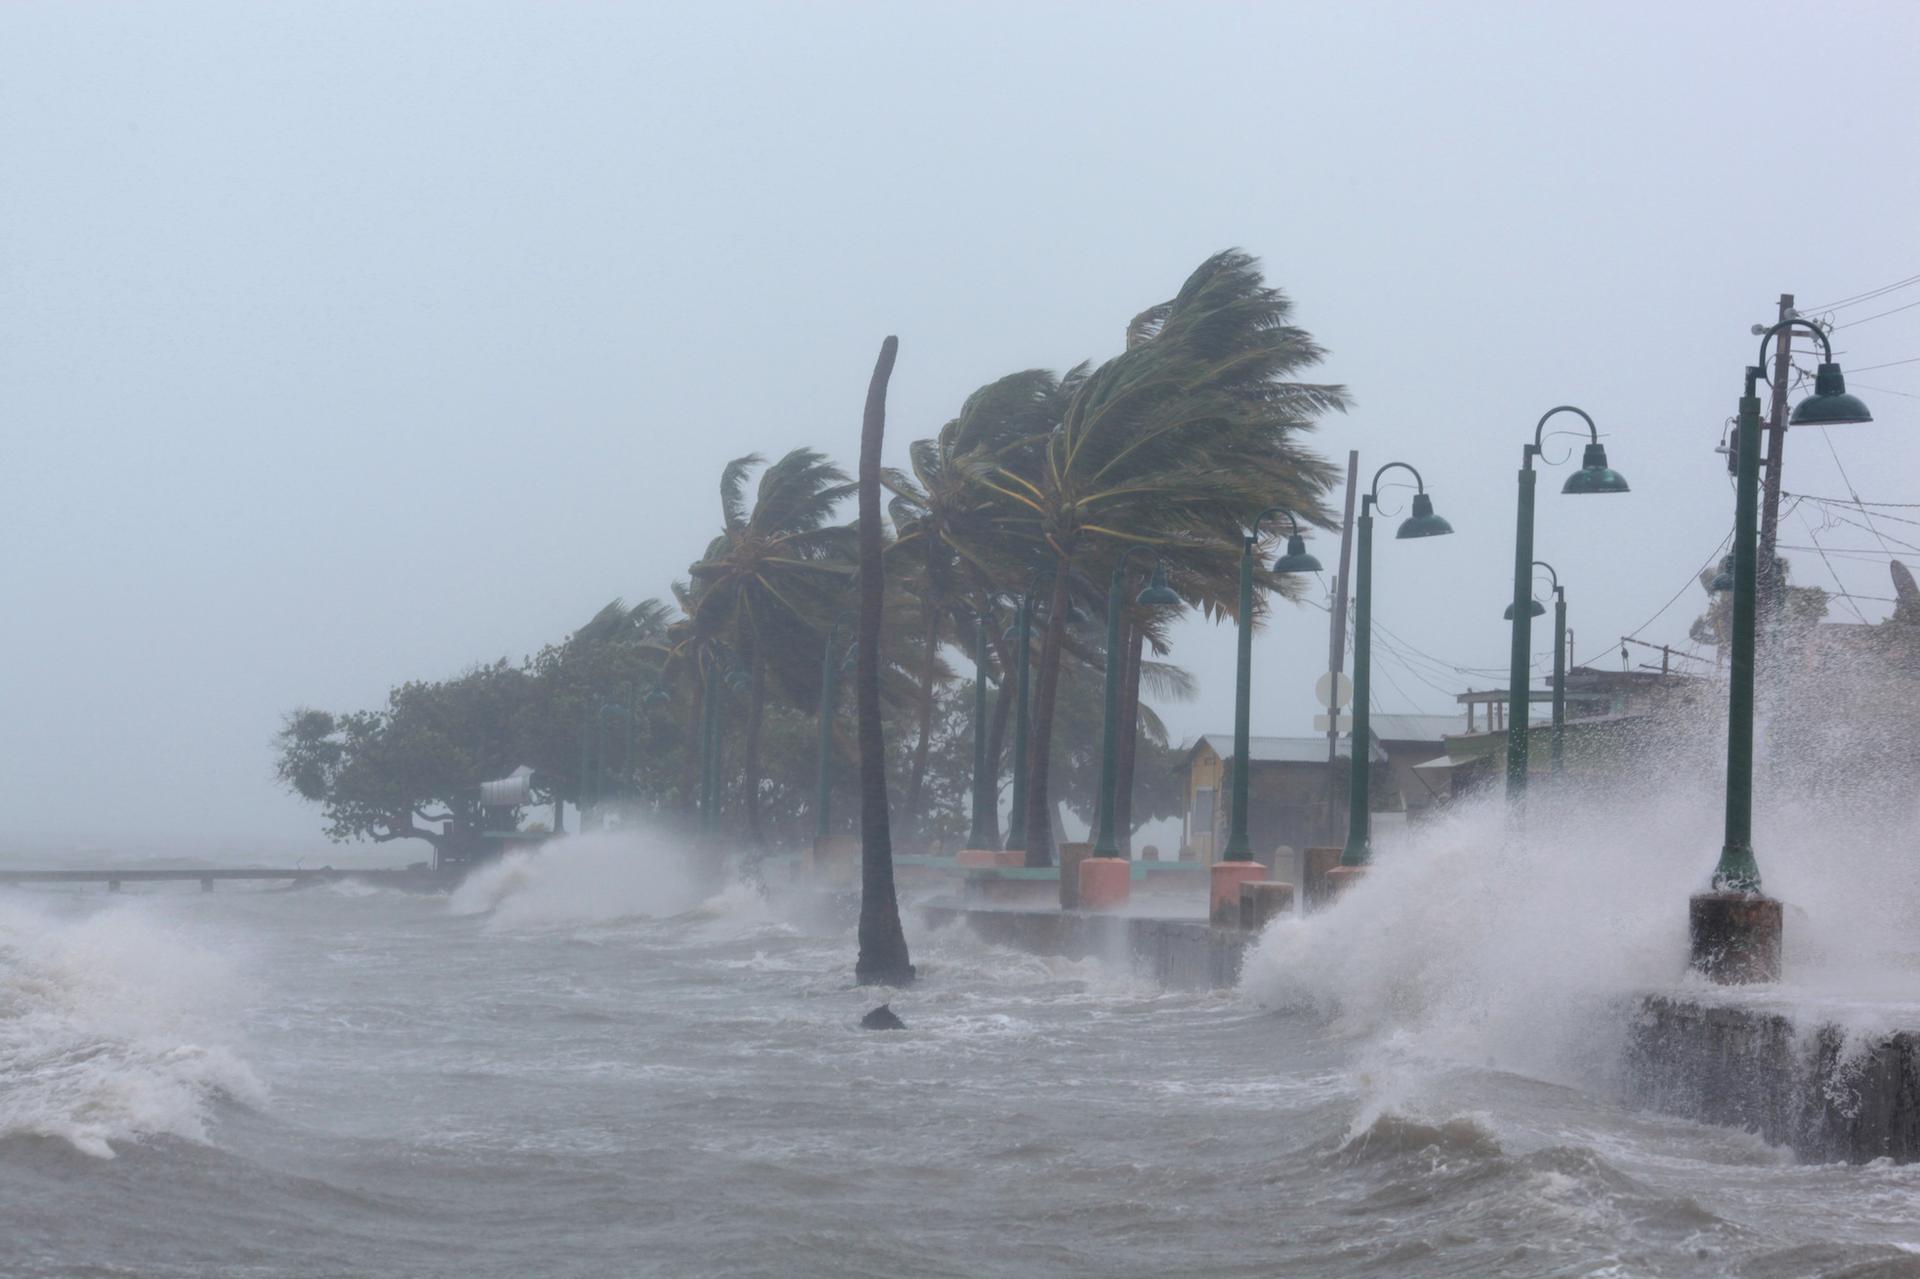 Waves crash against the seawall as Hurricane Irma slammed into Fajardo, Puerto Rico, on Sept. 6, 2017.